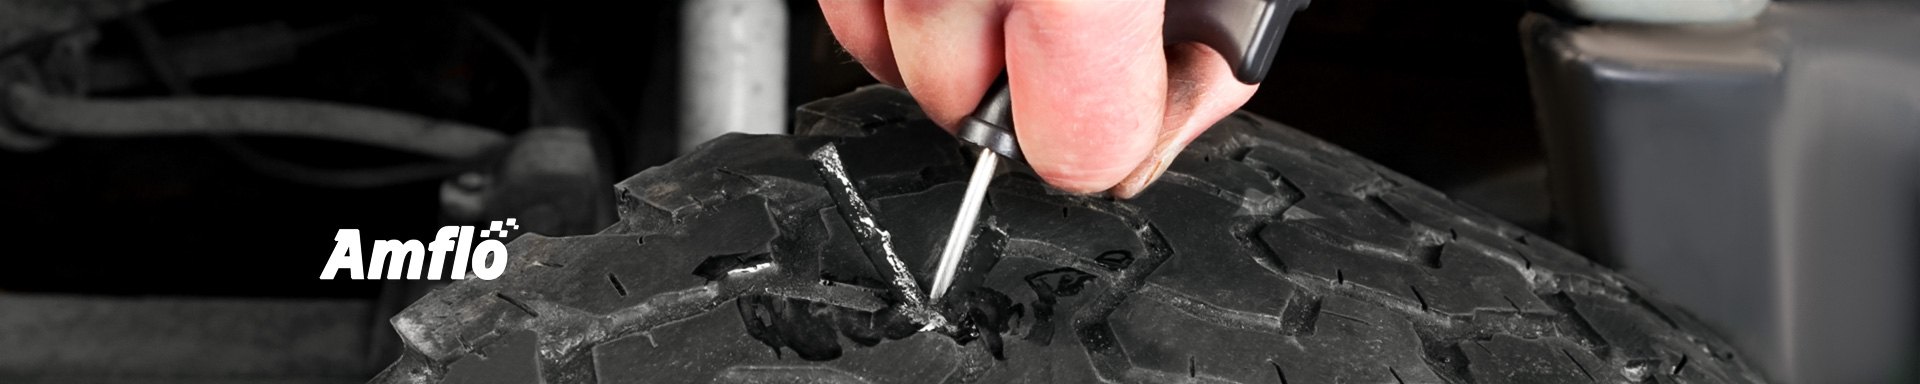 Amflo Tire Repair & Service Tools